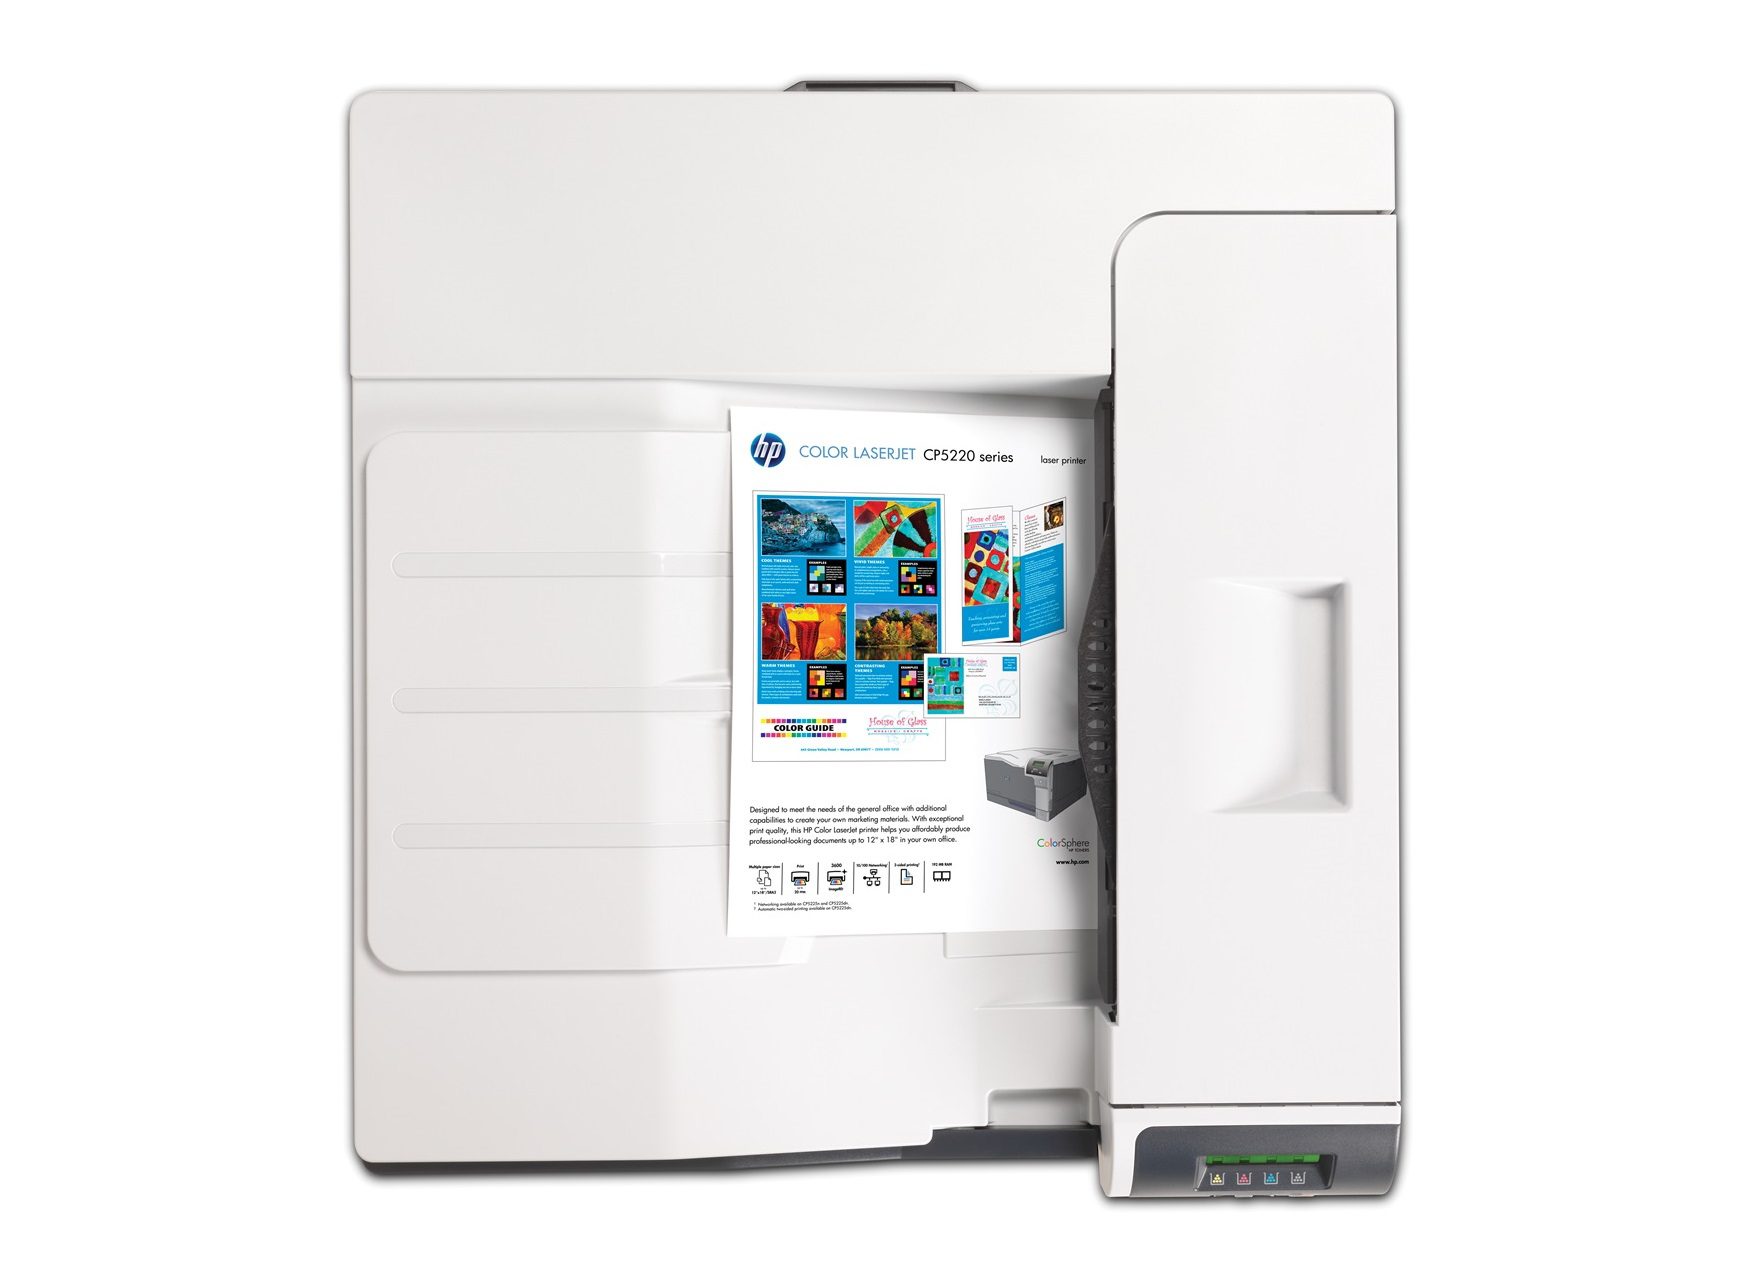 HP Color LaserJet Professional CP5225 A3 Color Laser Printer 20ppm